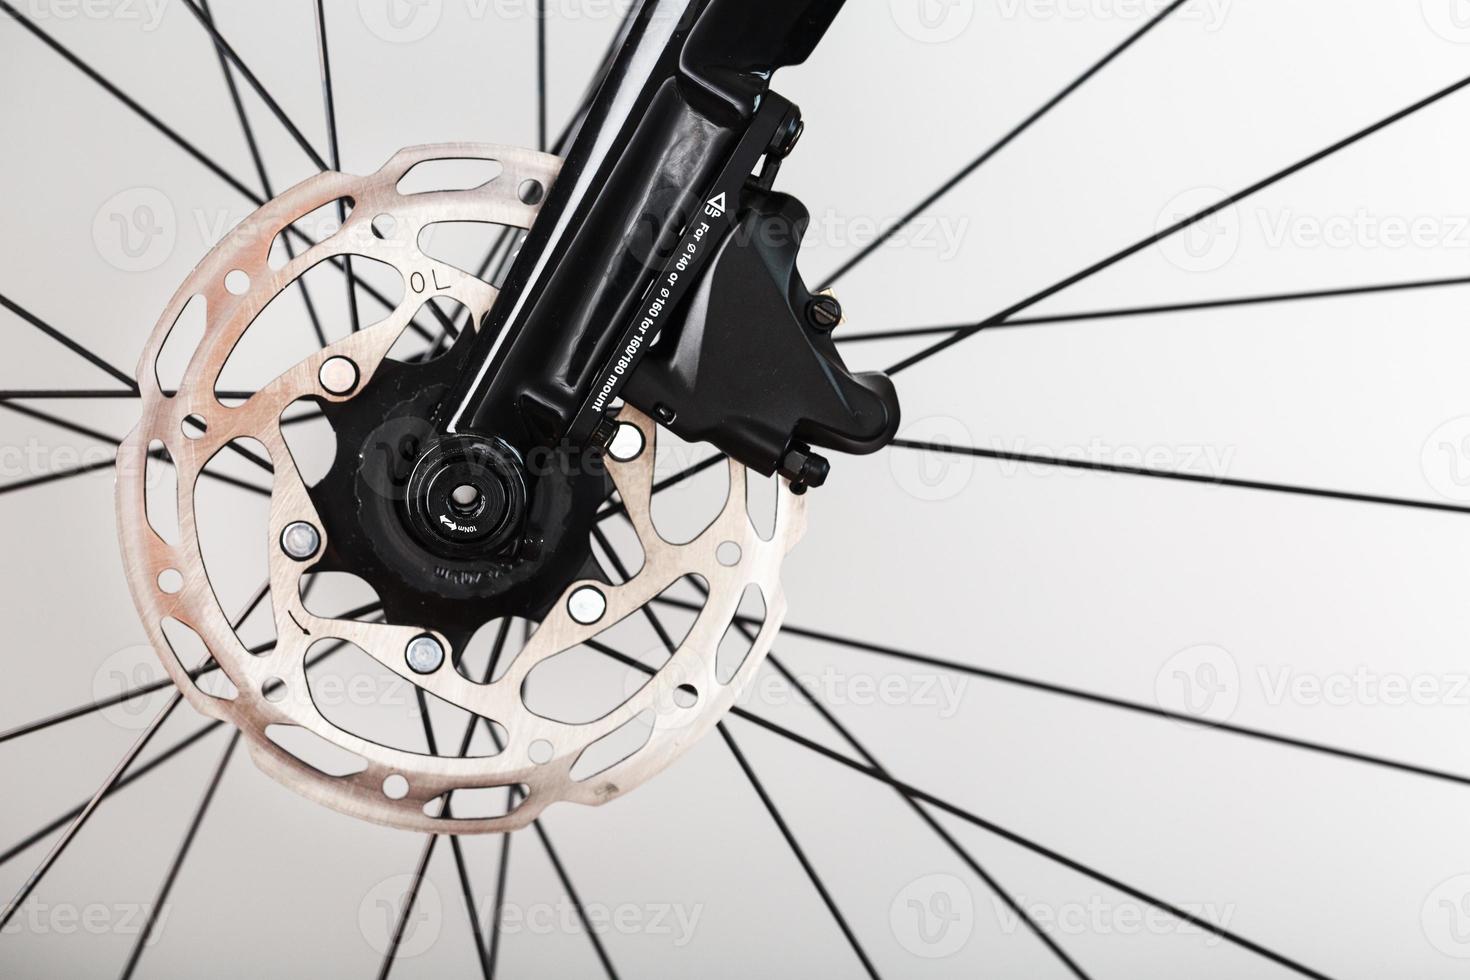 Bicycle Brake Rotor with Hydraulic Highway Braking System close-up photo